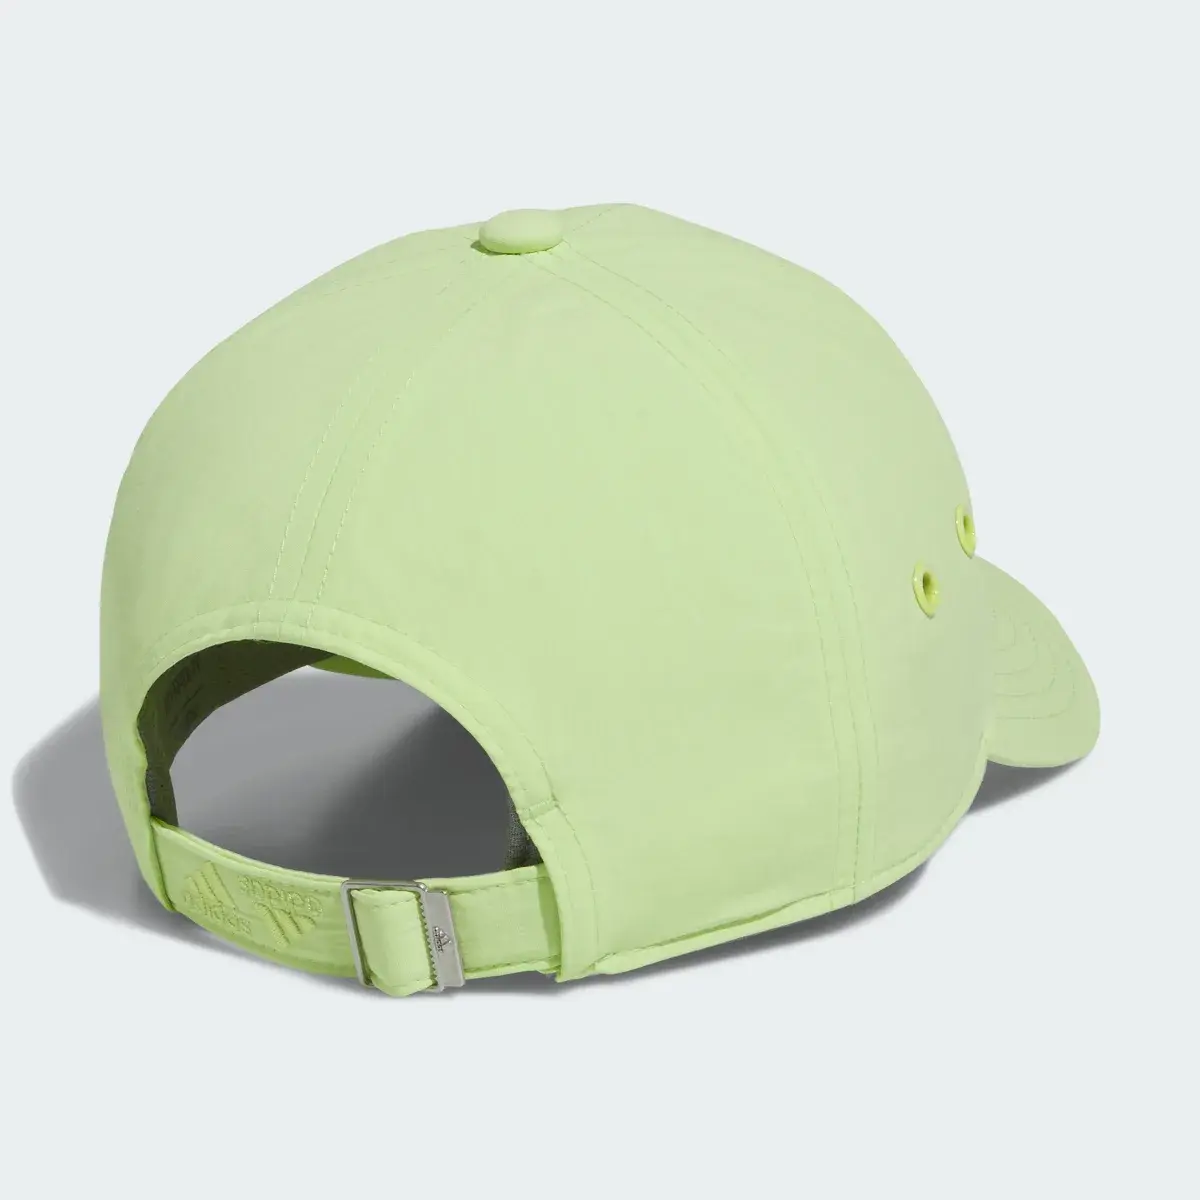 Adidas Influencer 3 Hat. 3